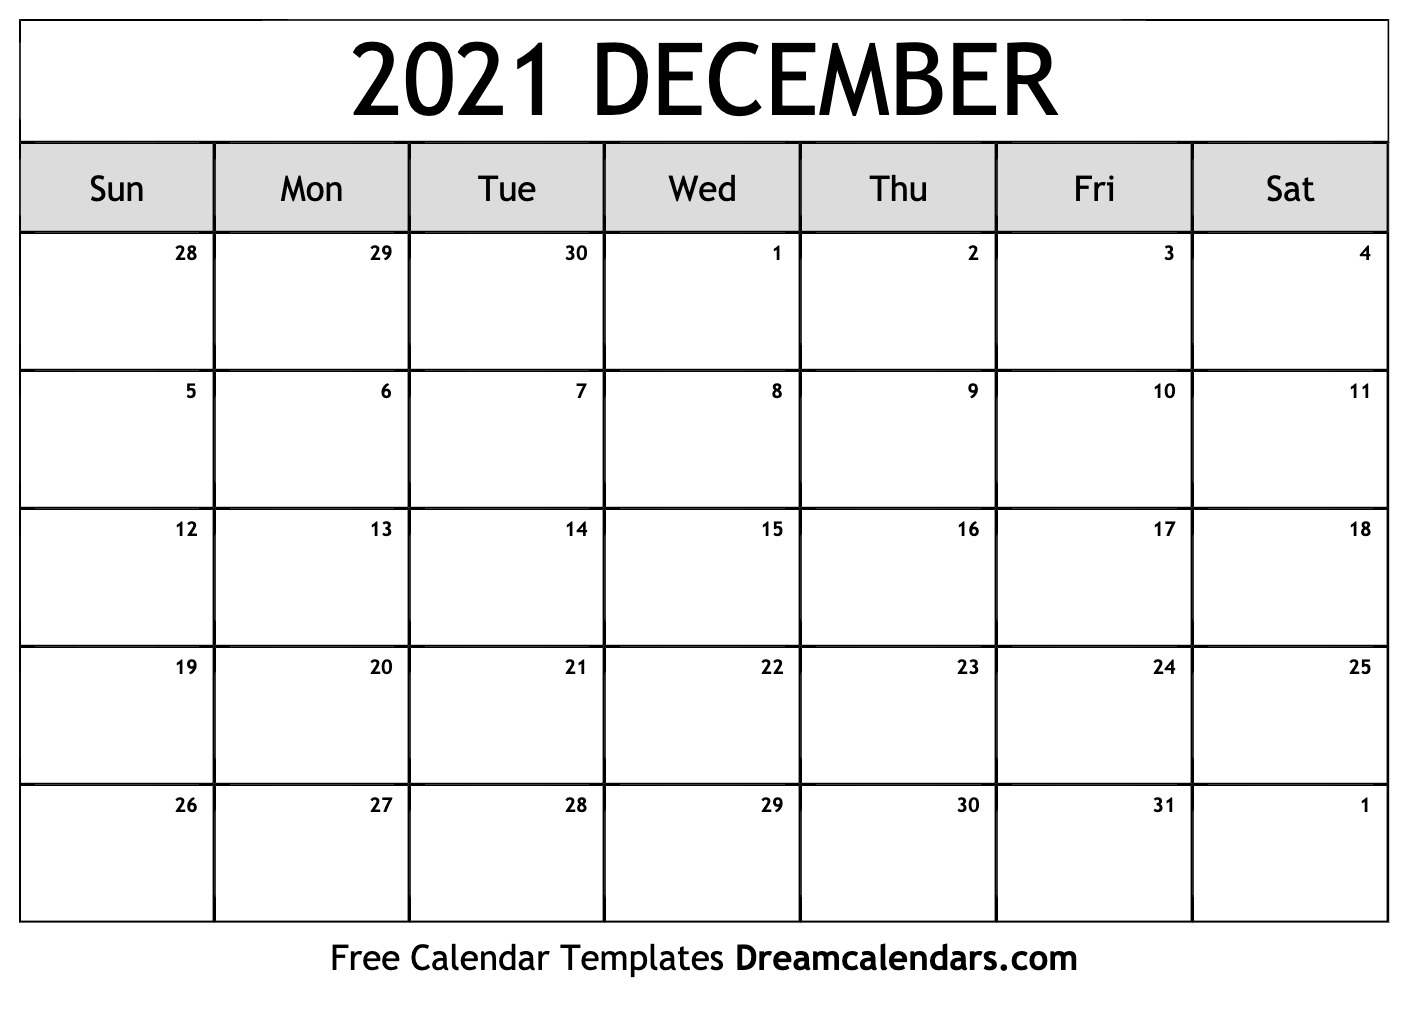 December, 2021